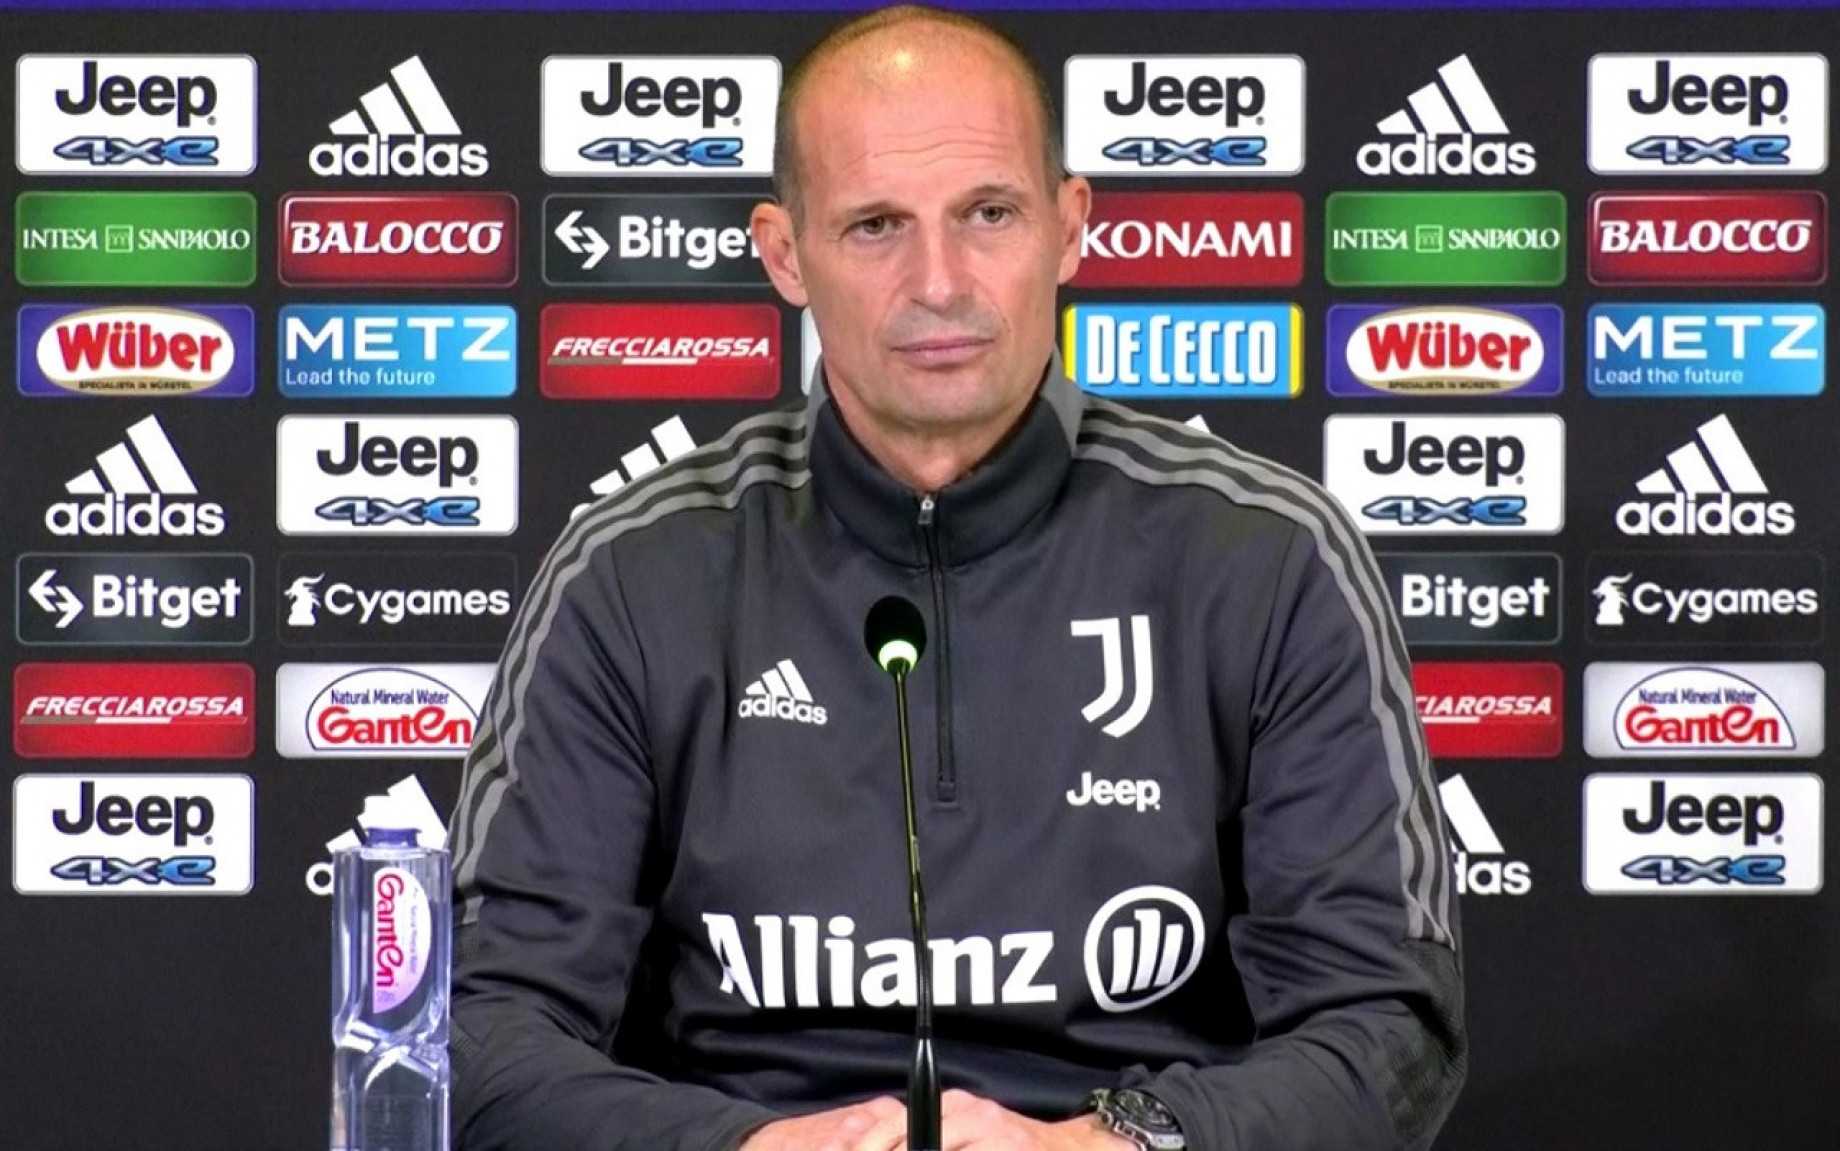 Conferenza stampa Lazio-Juventus, Allegri: "Sarà una partita difficile"